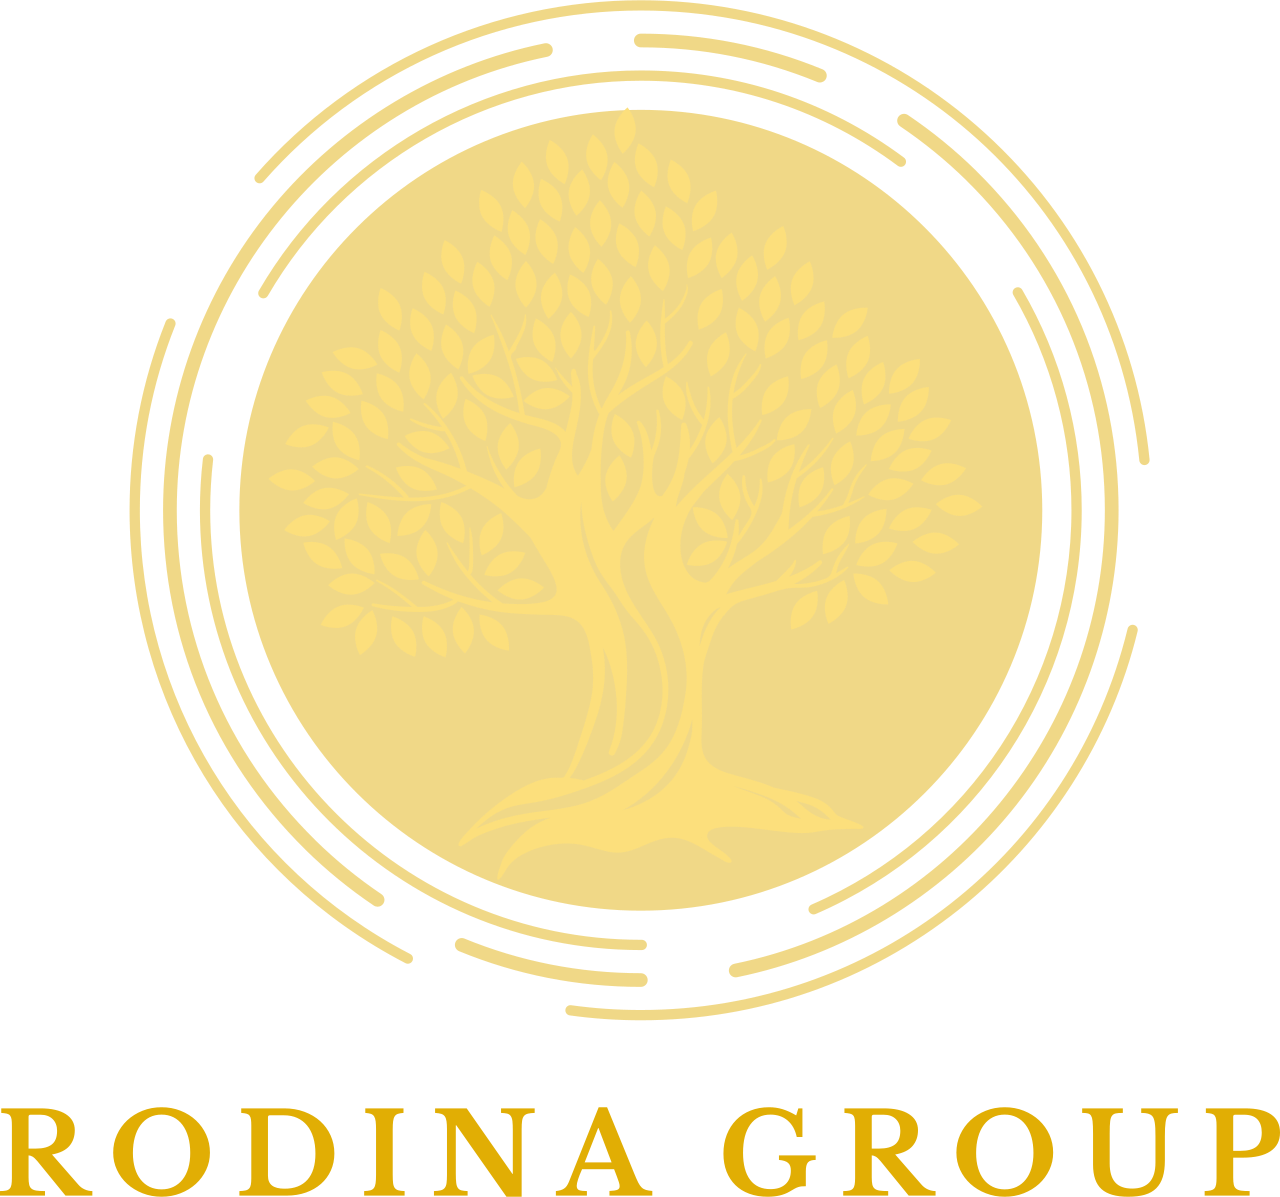 Rodina Group's logo